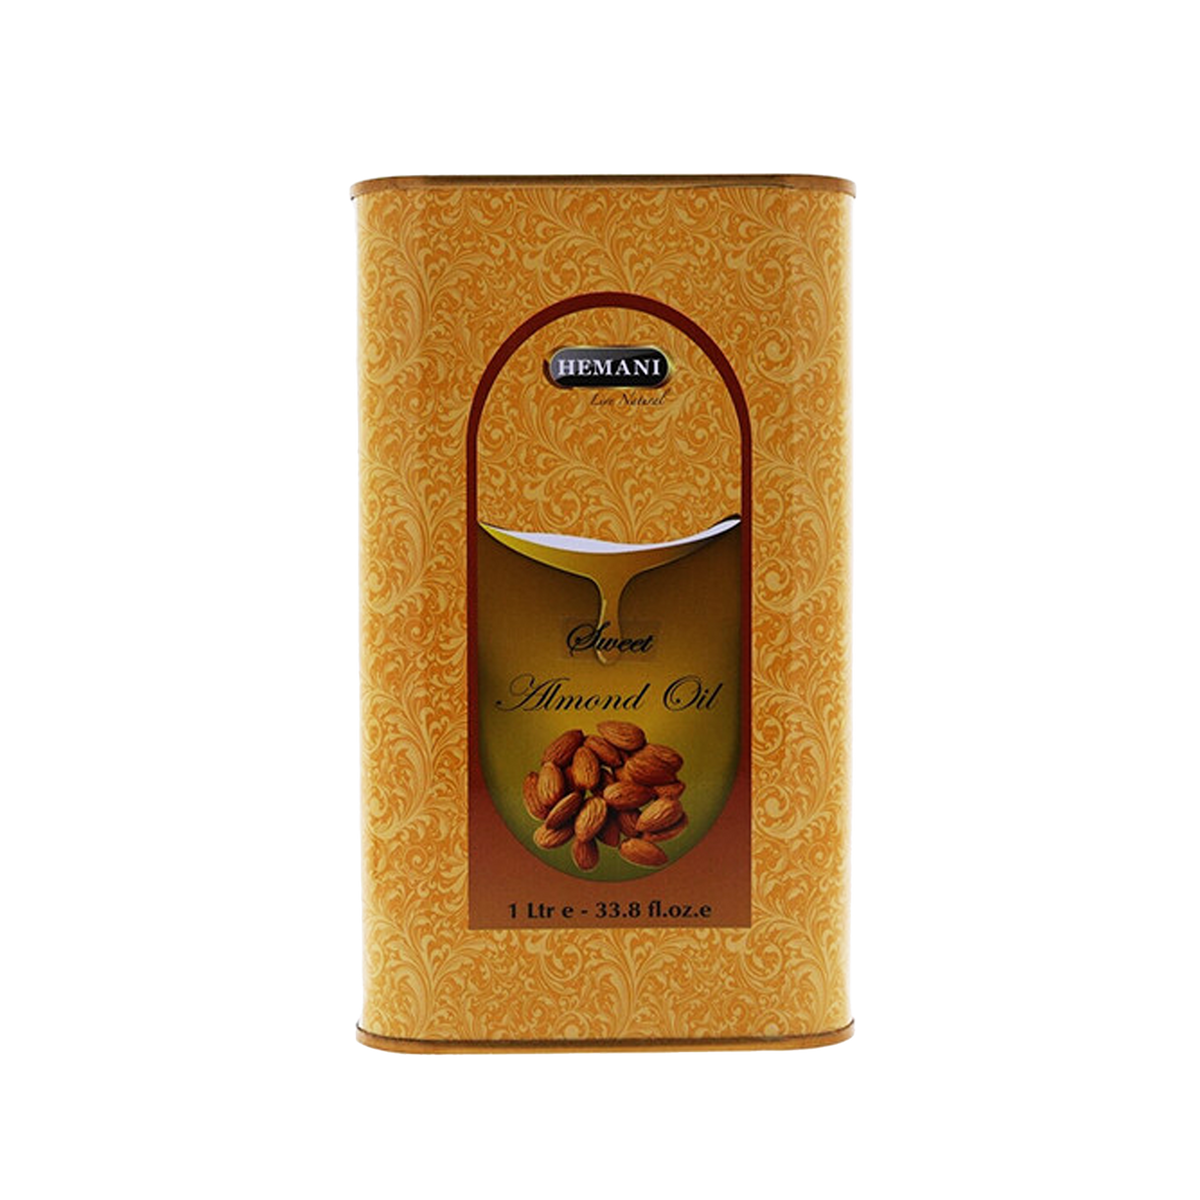 Hemani Herbal Oil Sweet Almond Oil 1L